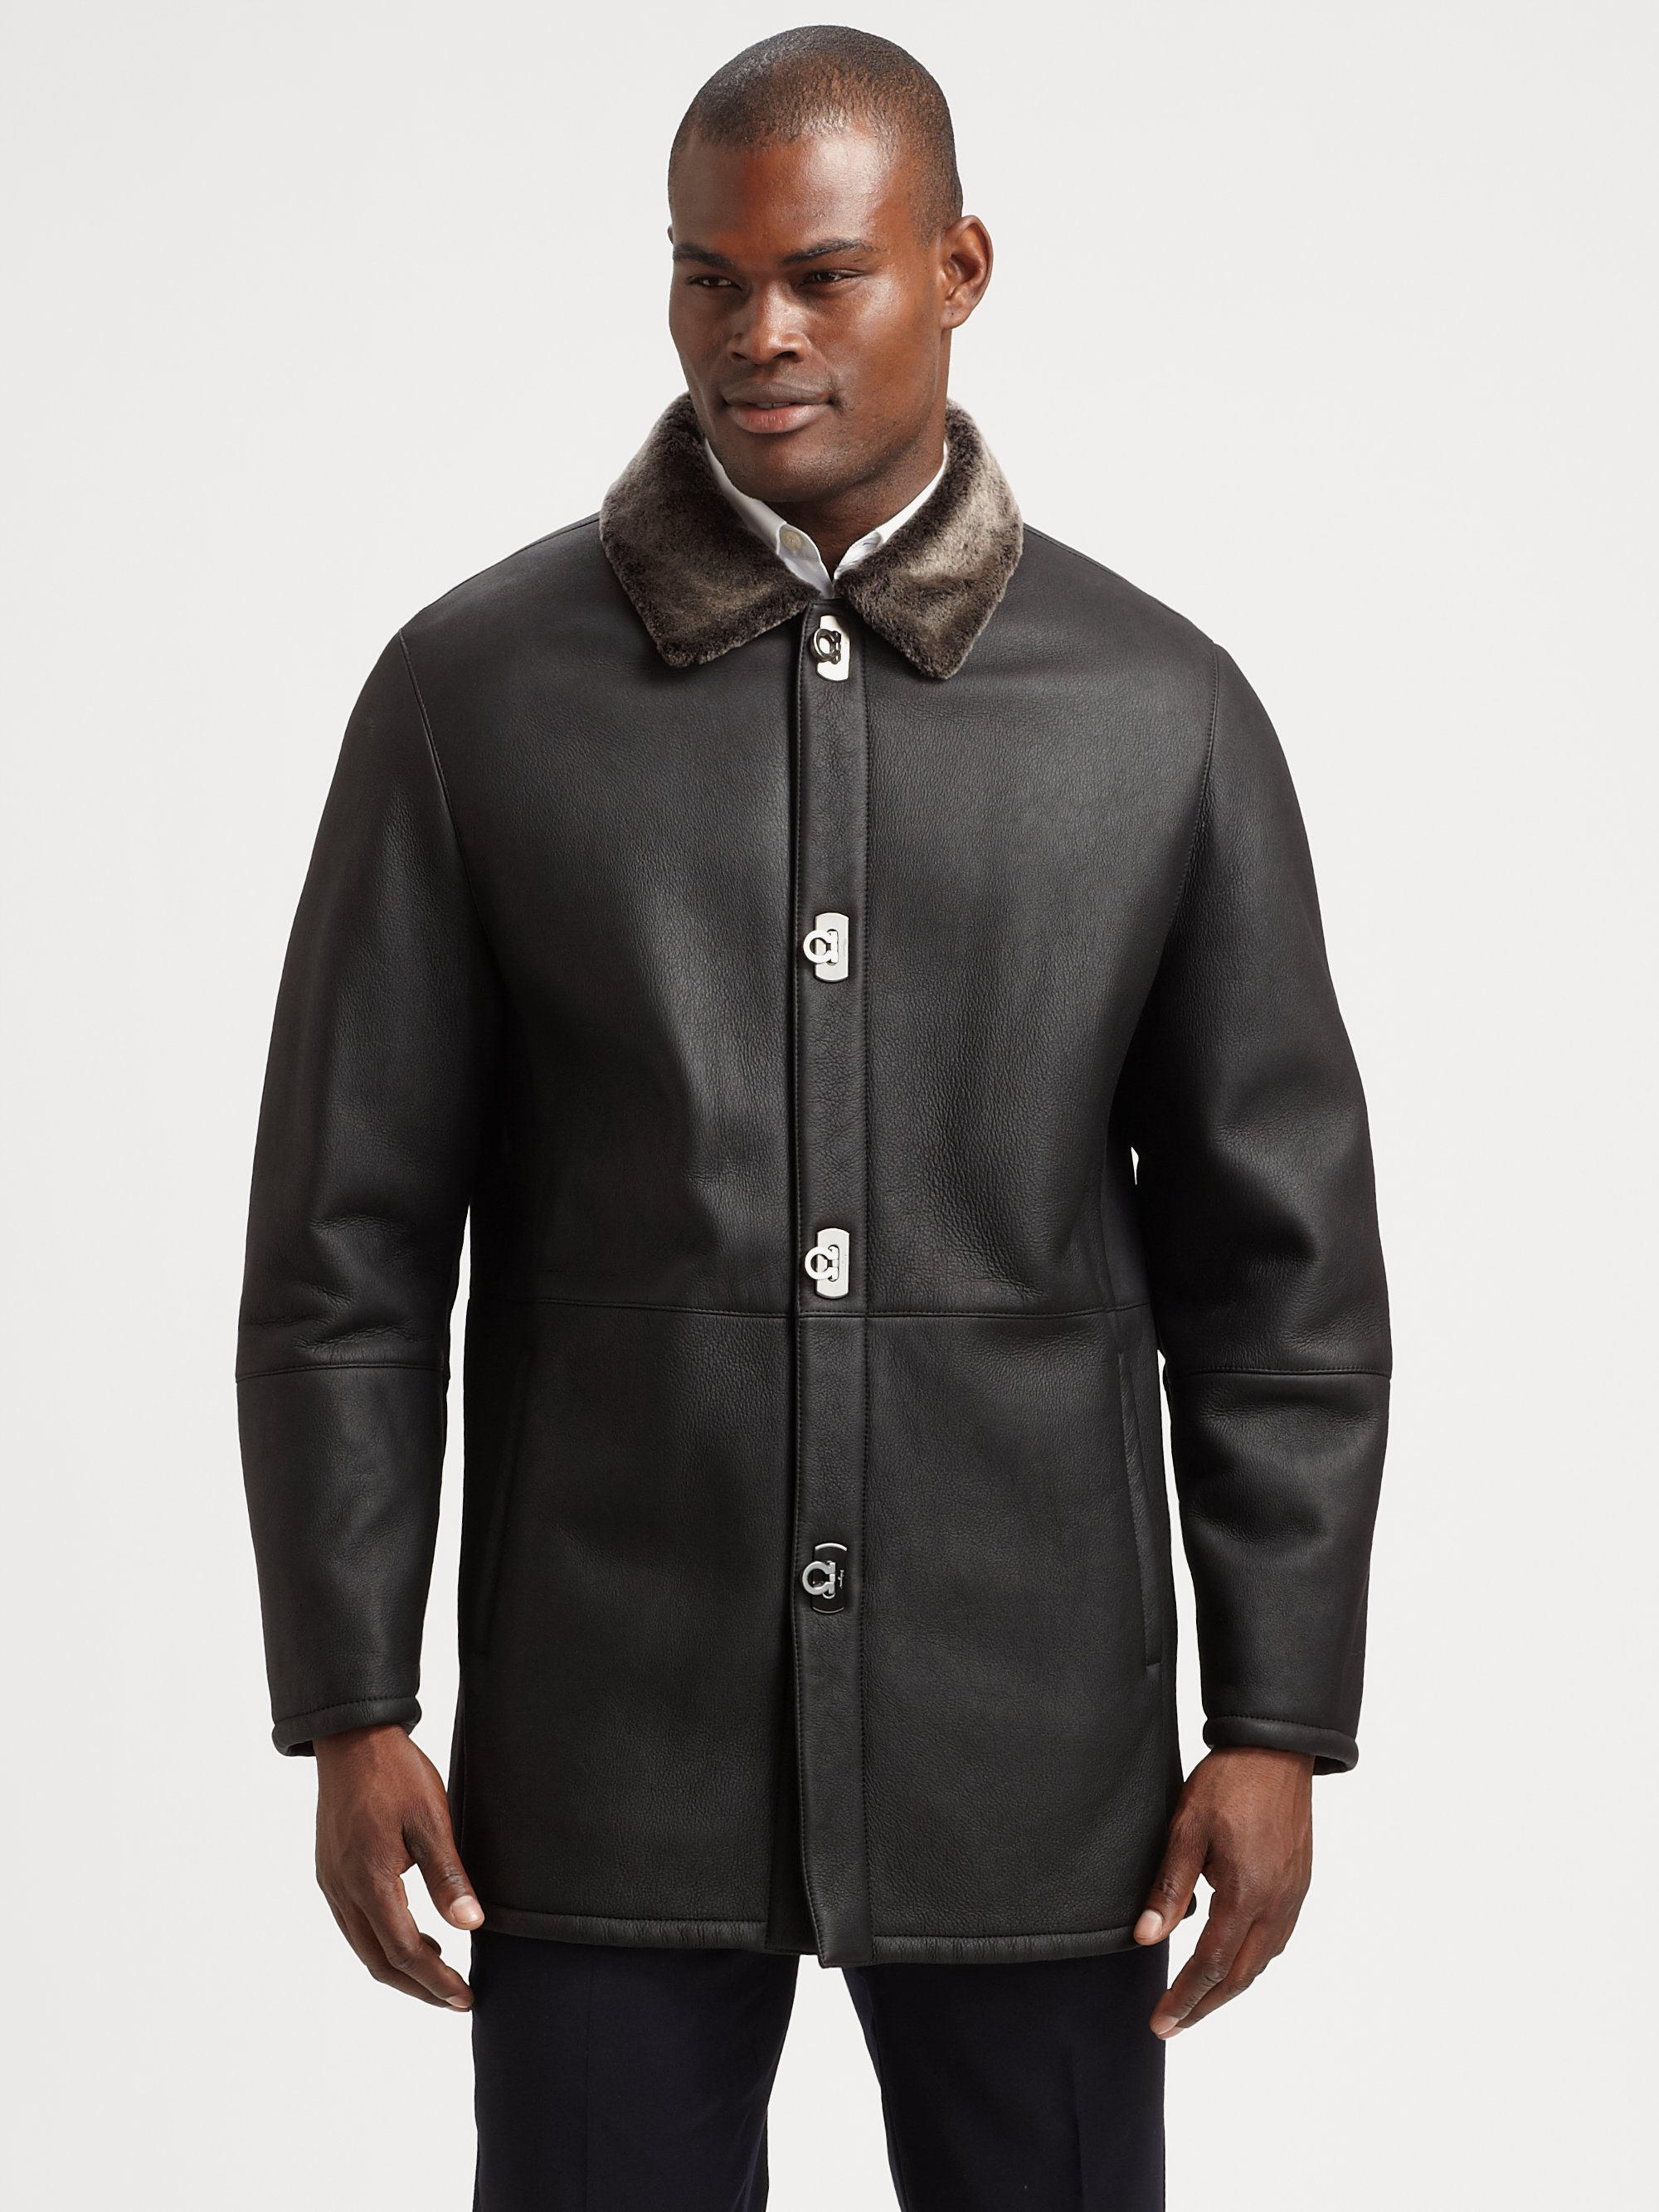 Ferragamo Shearling Trimmed Leather Coat in Black for Men - Lyst